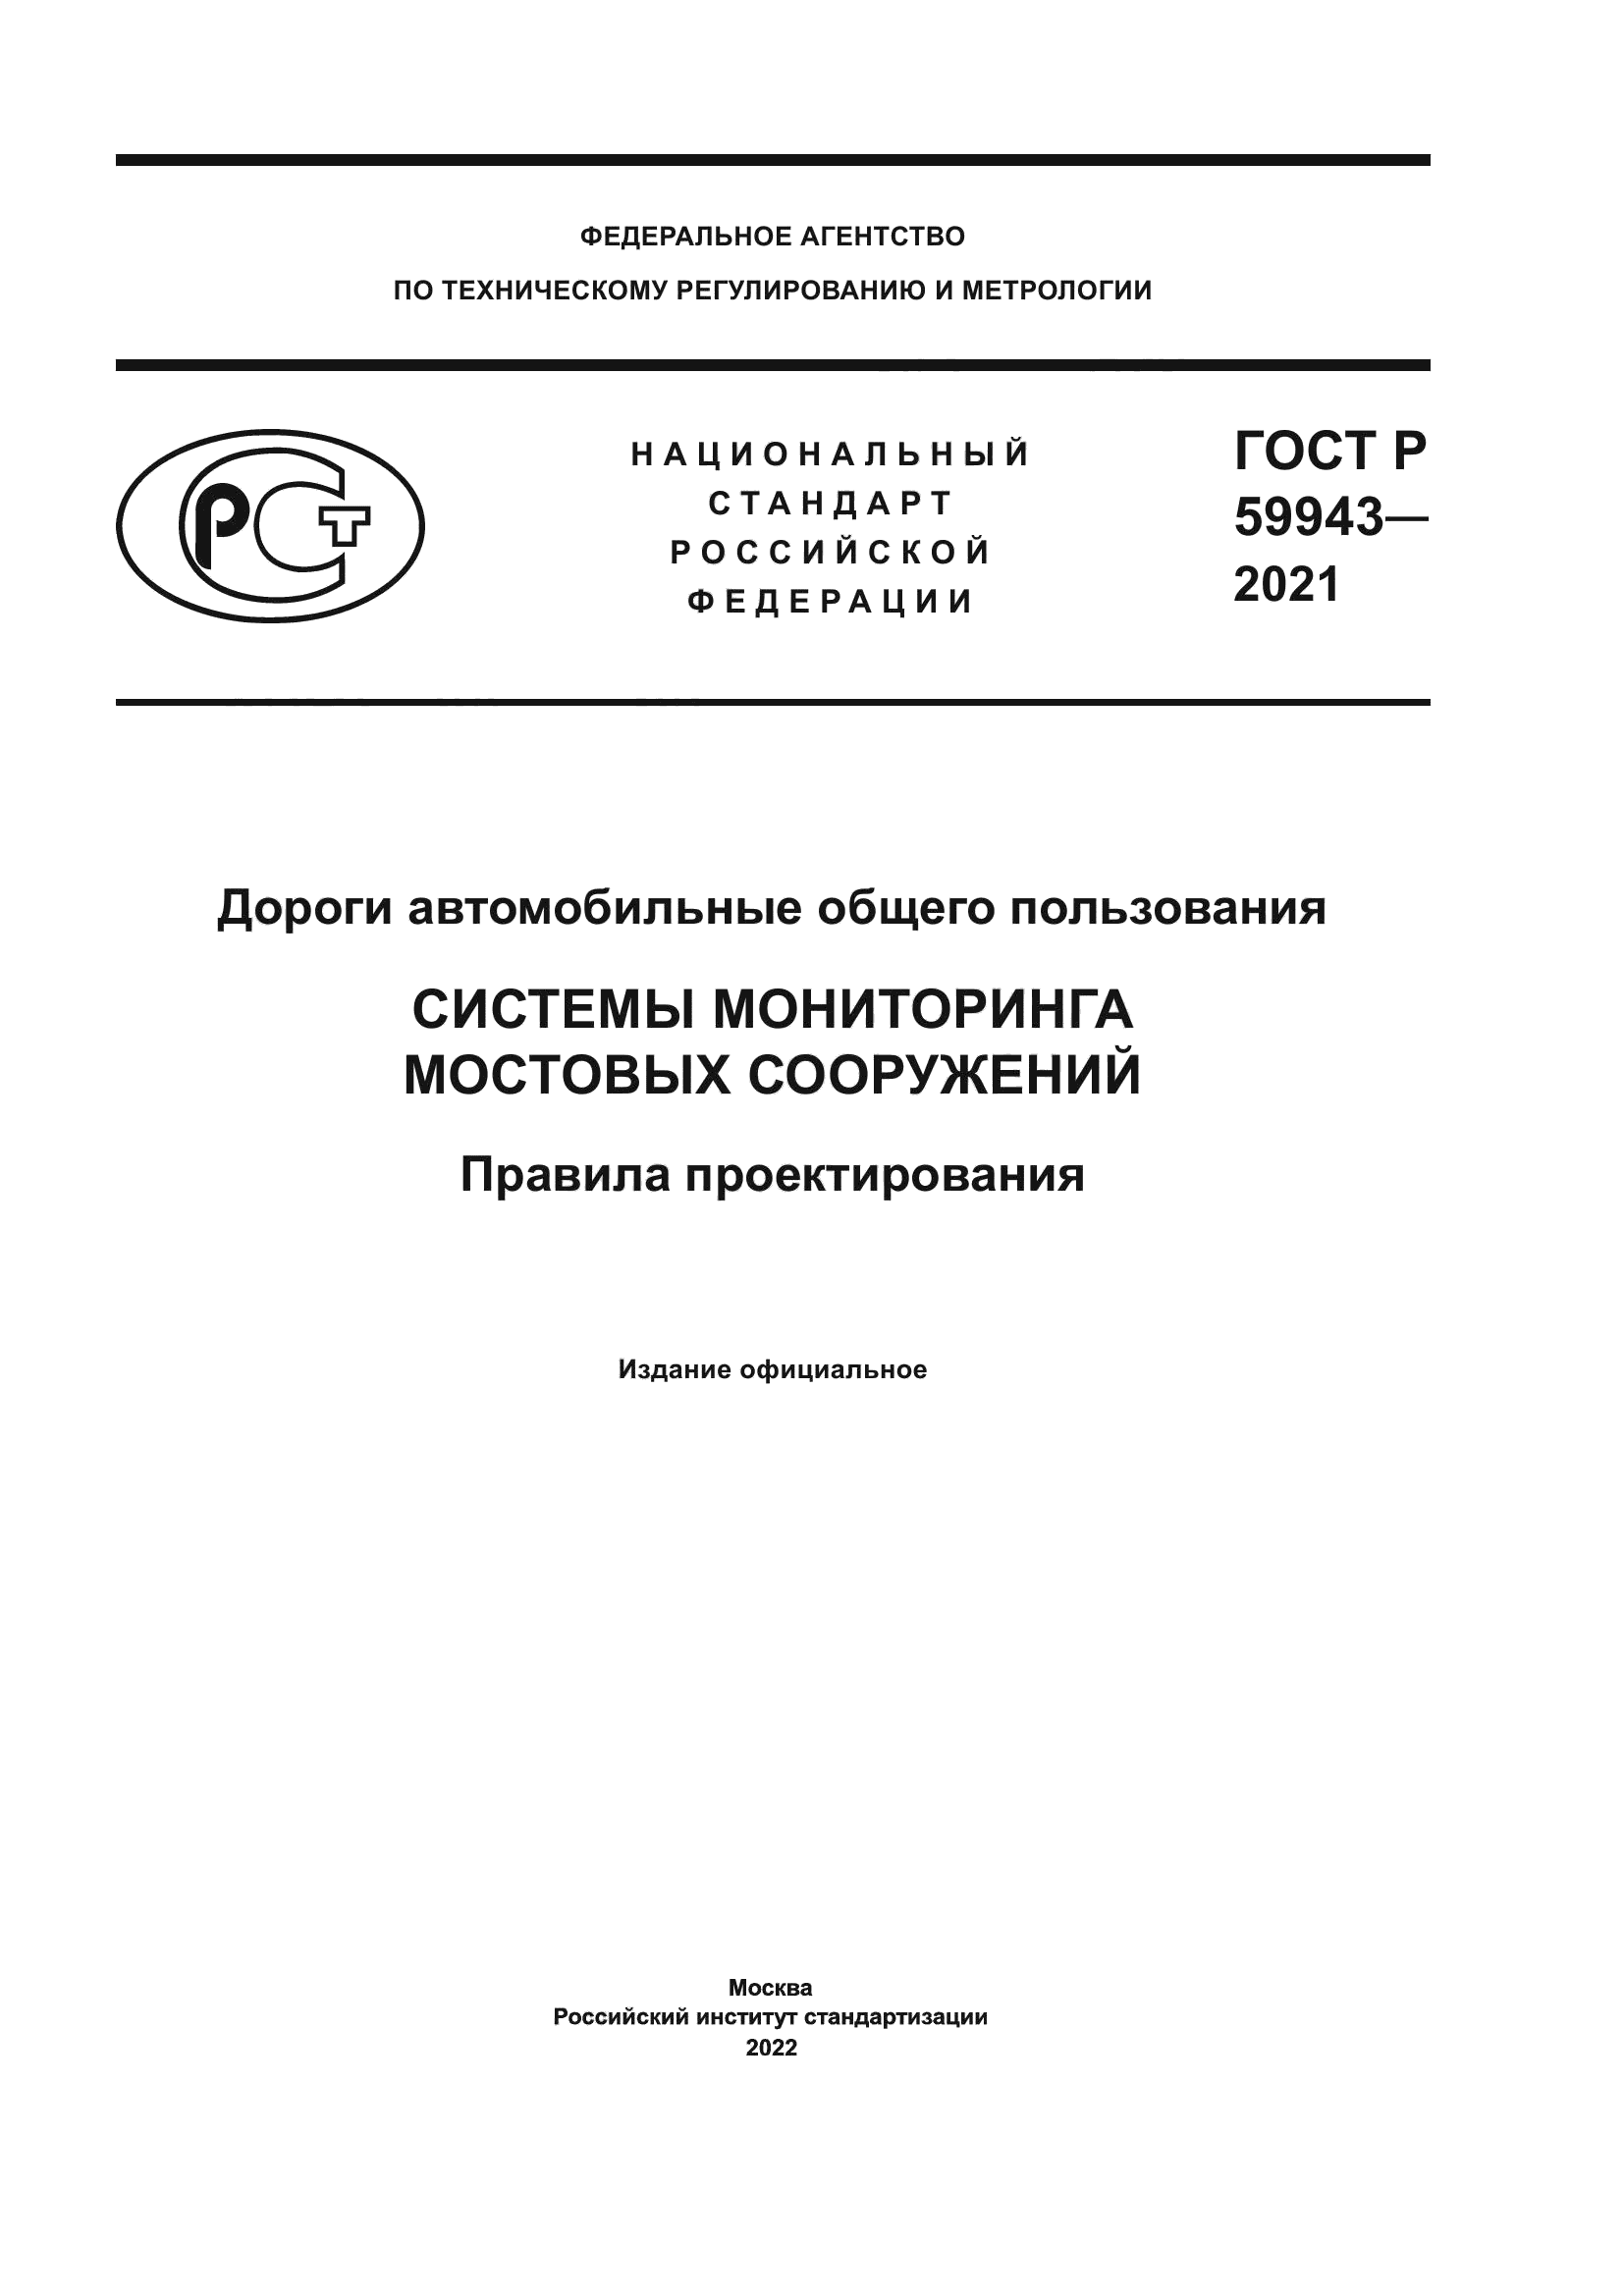 ГОСТ Р 59943-2021